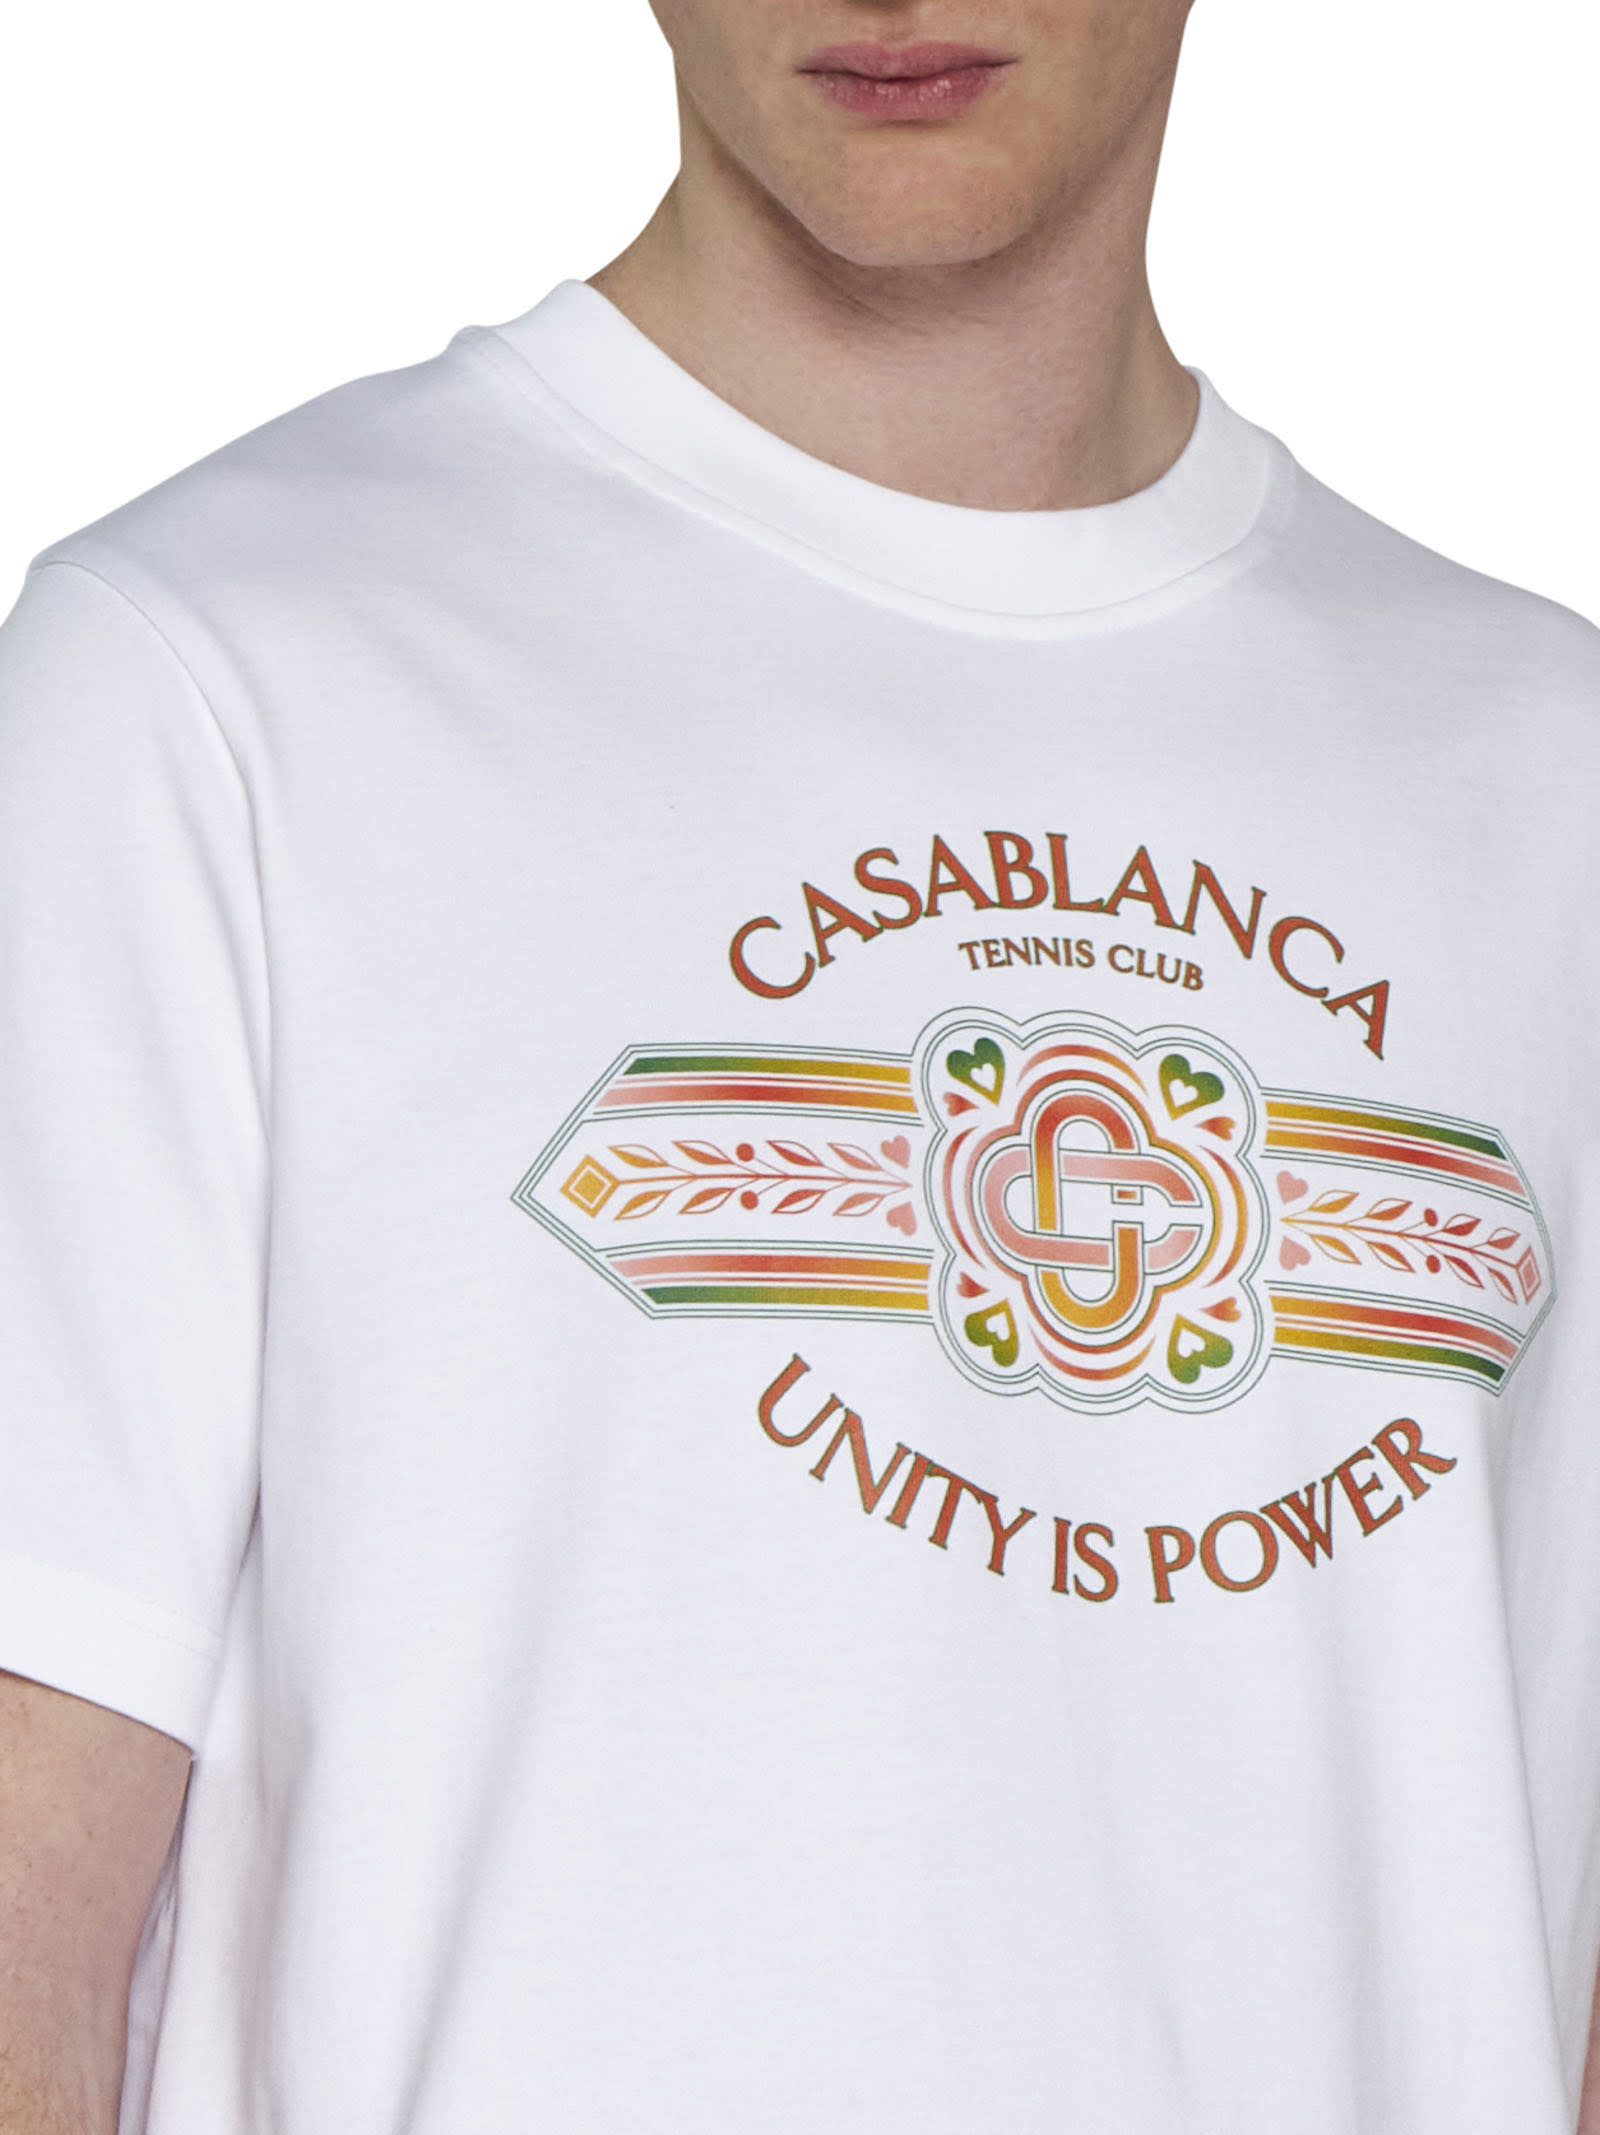 Shop Casablanca T-shirt In Unity Is Power